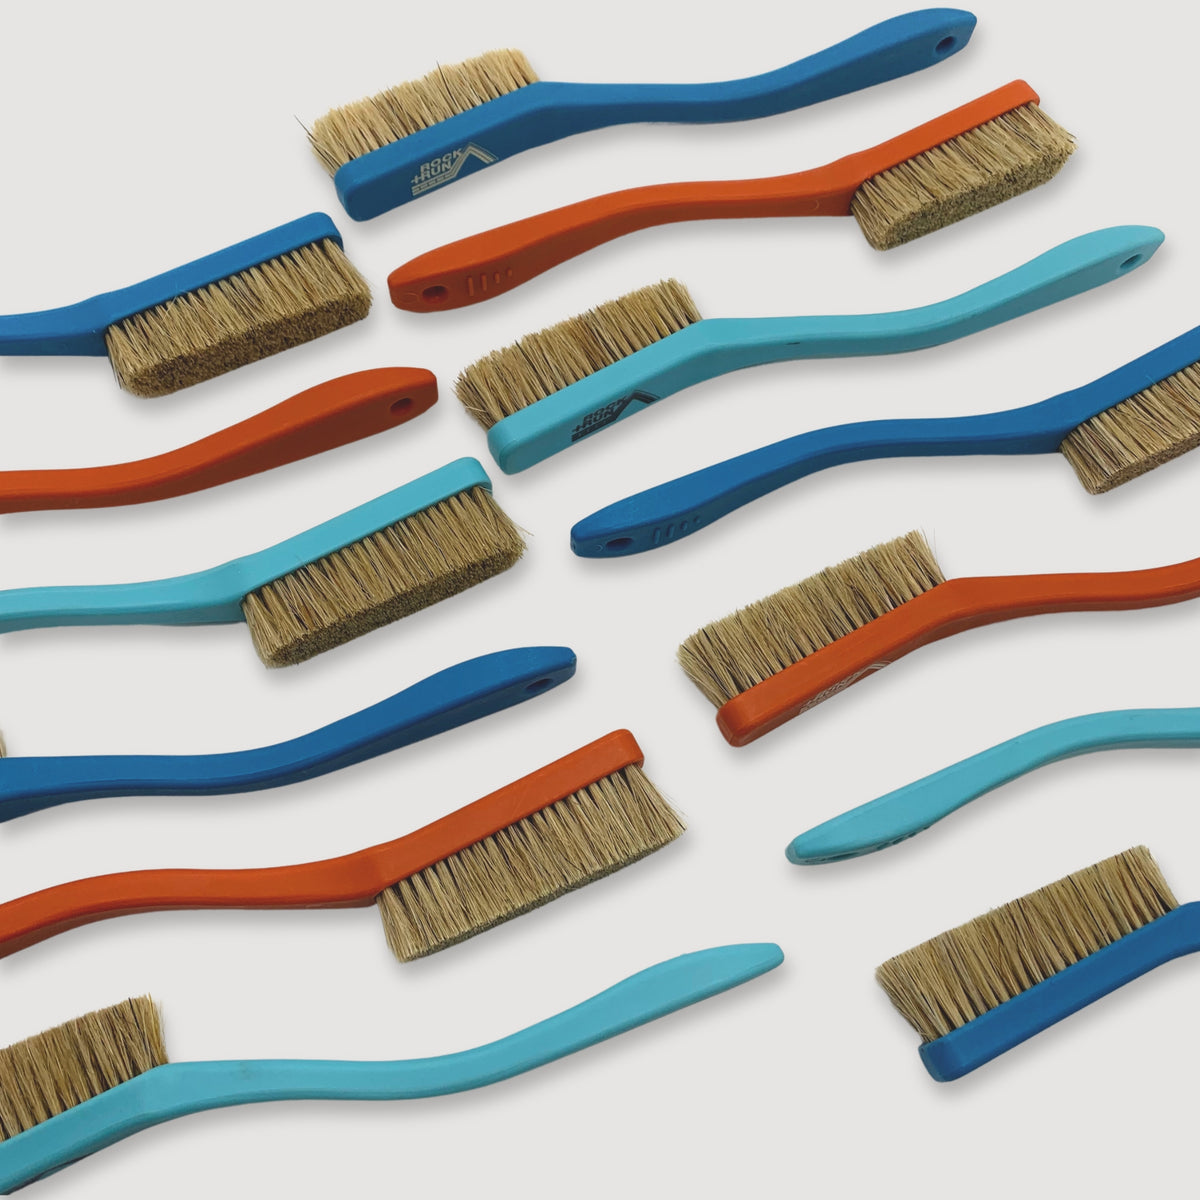 Rock + Run Boars Hair Brushes in colours orange, light blue and dark blue